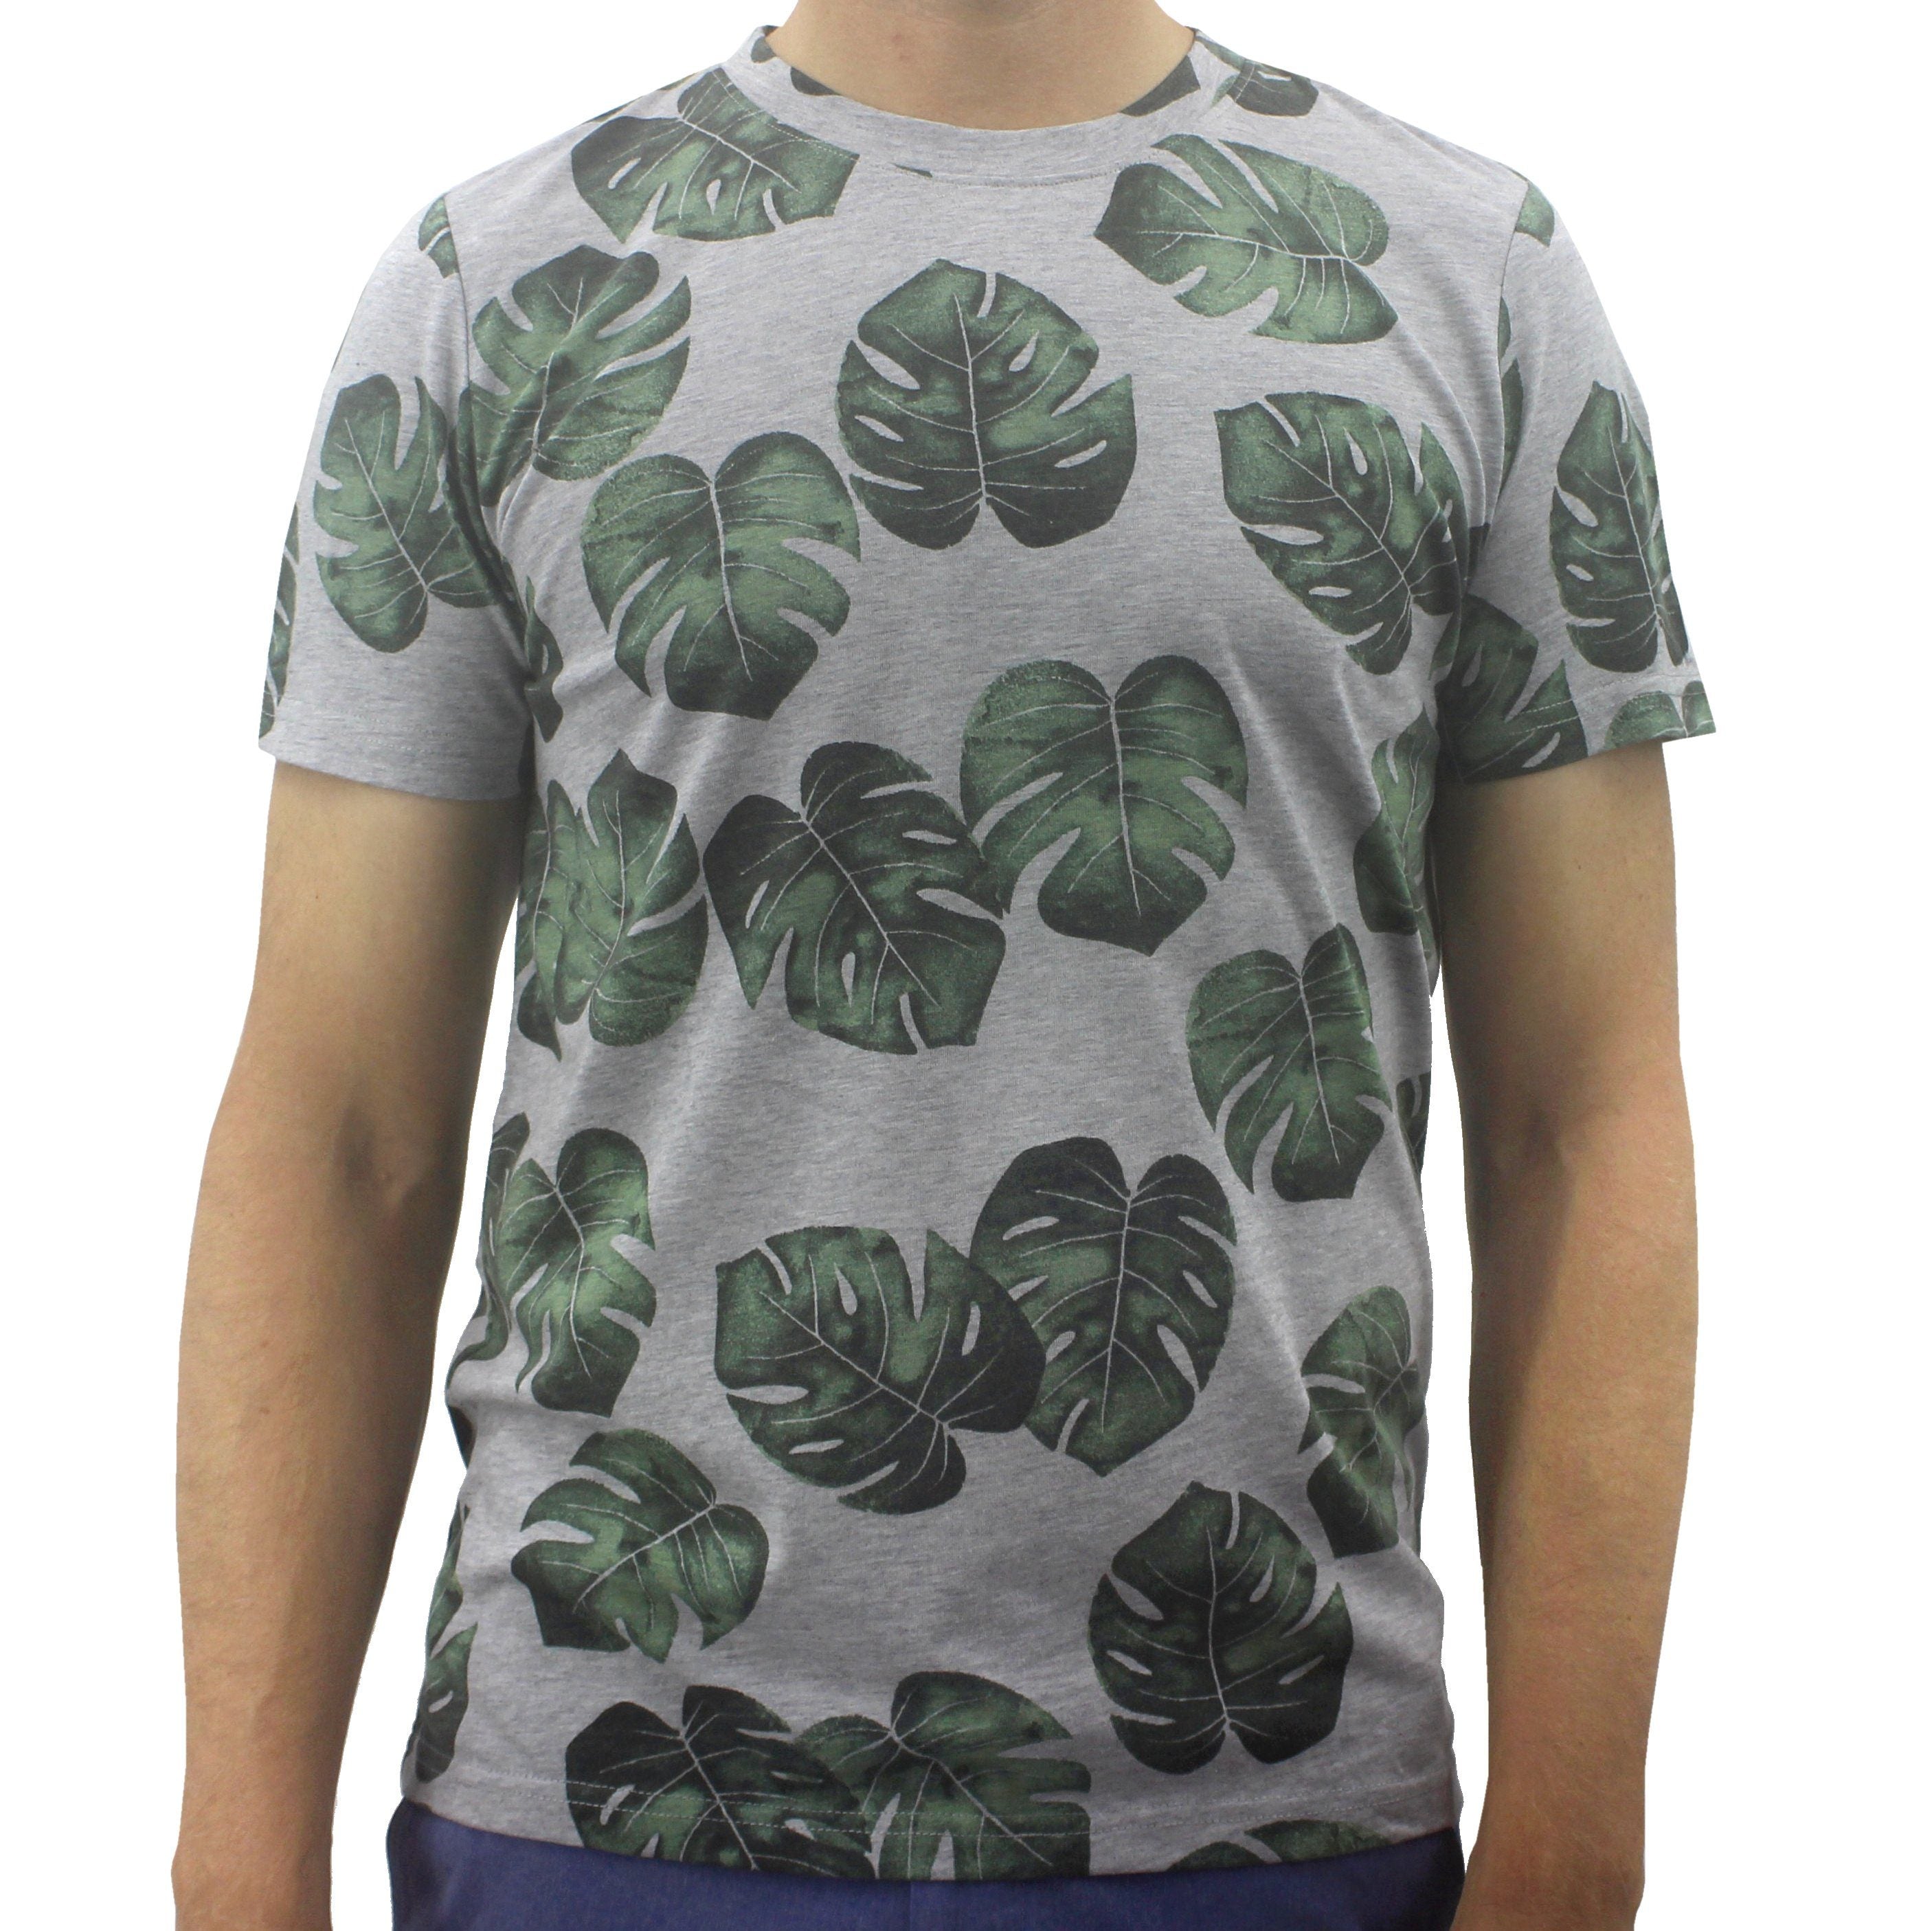 Summer Essentials Round Crew Neck Leaf Patterned Soft Cotton Jersey T-Shirt Tees